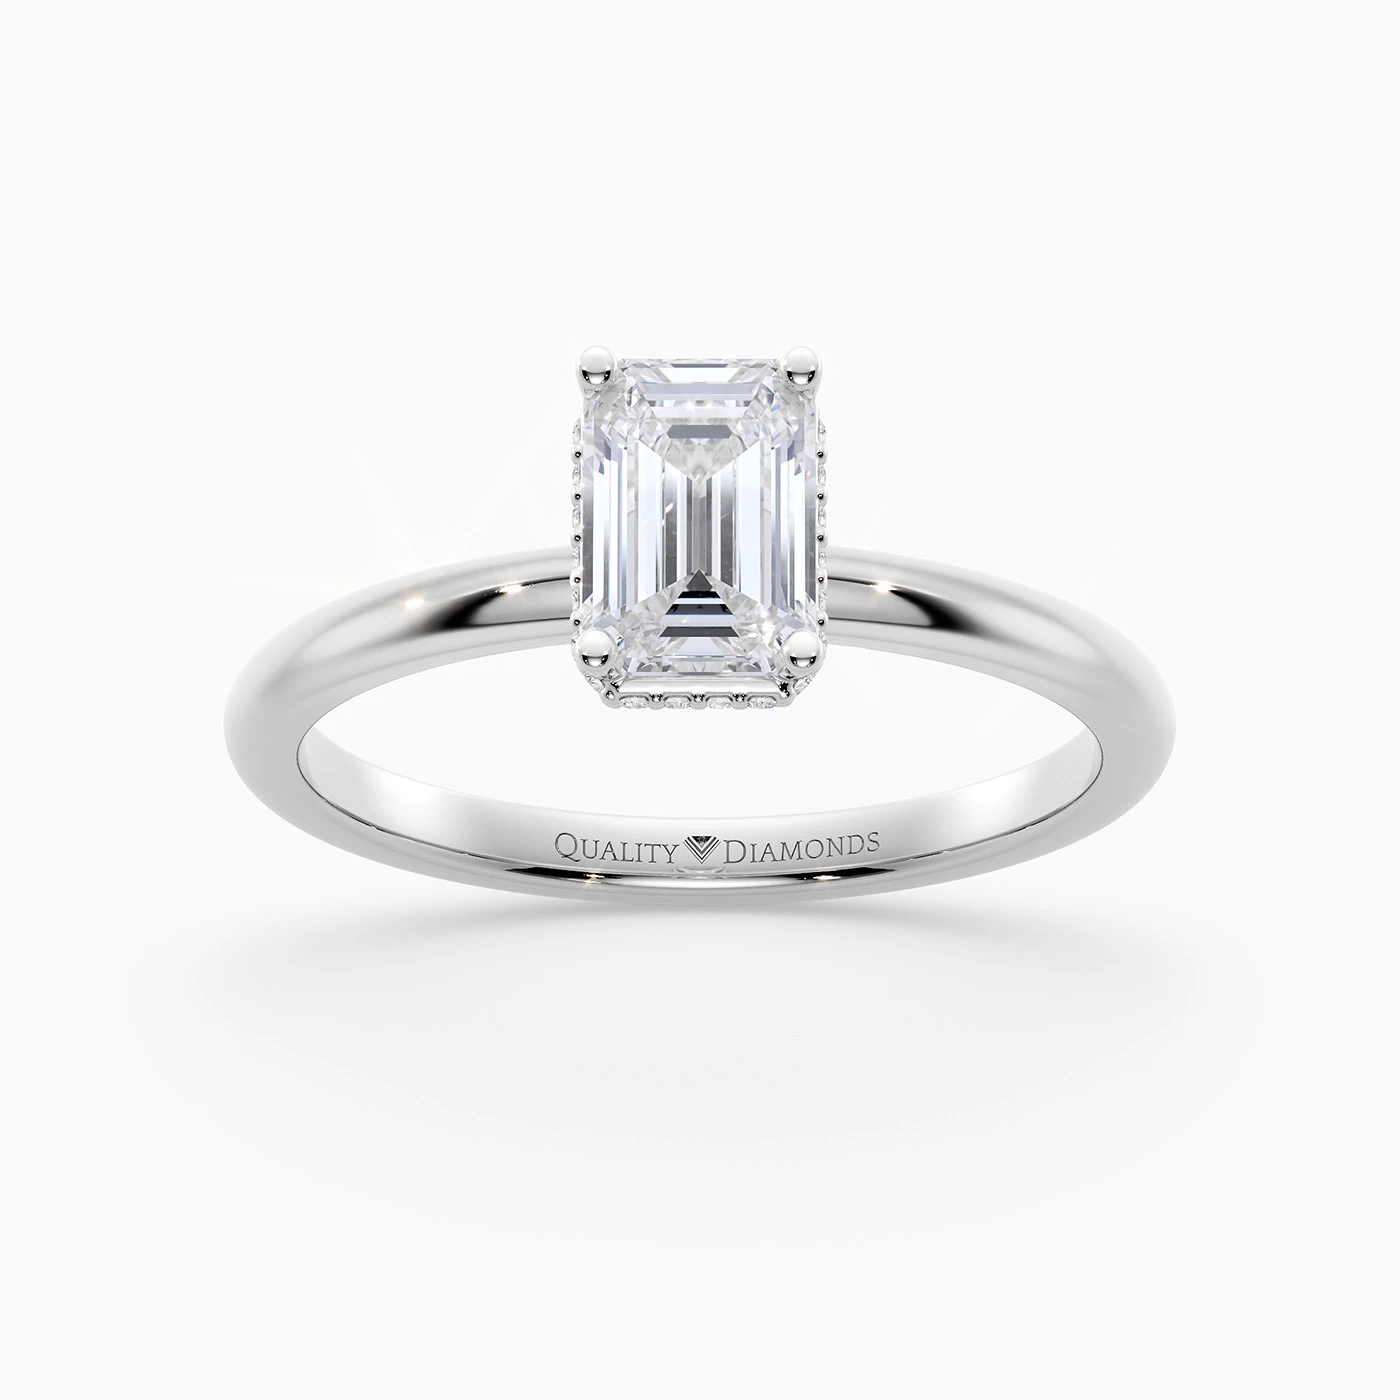 Emerald Liraz Hidden Halo Diamond Ring in Platinum